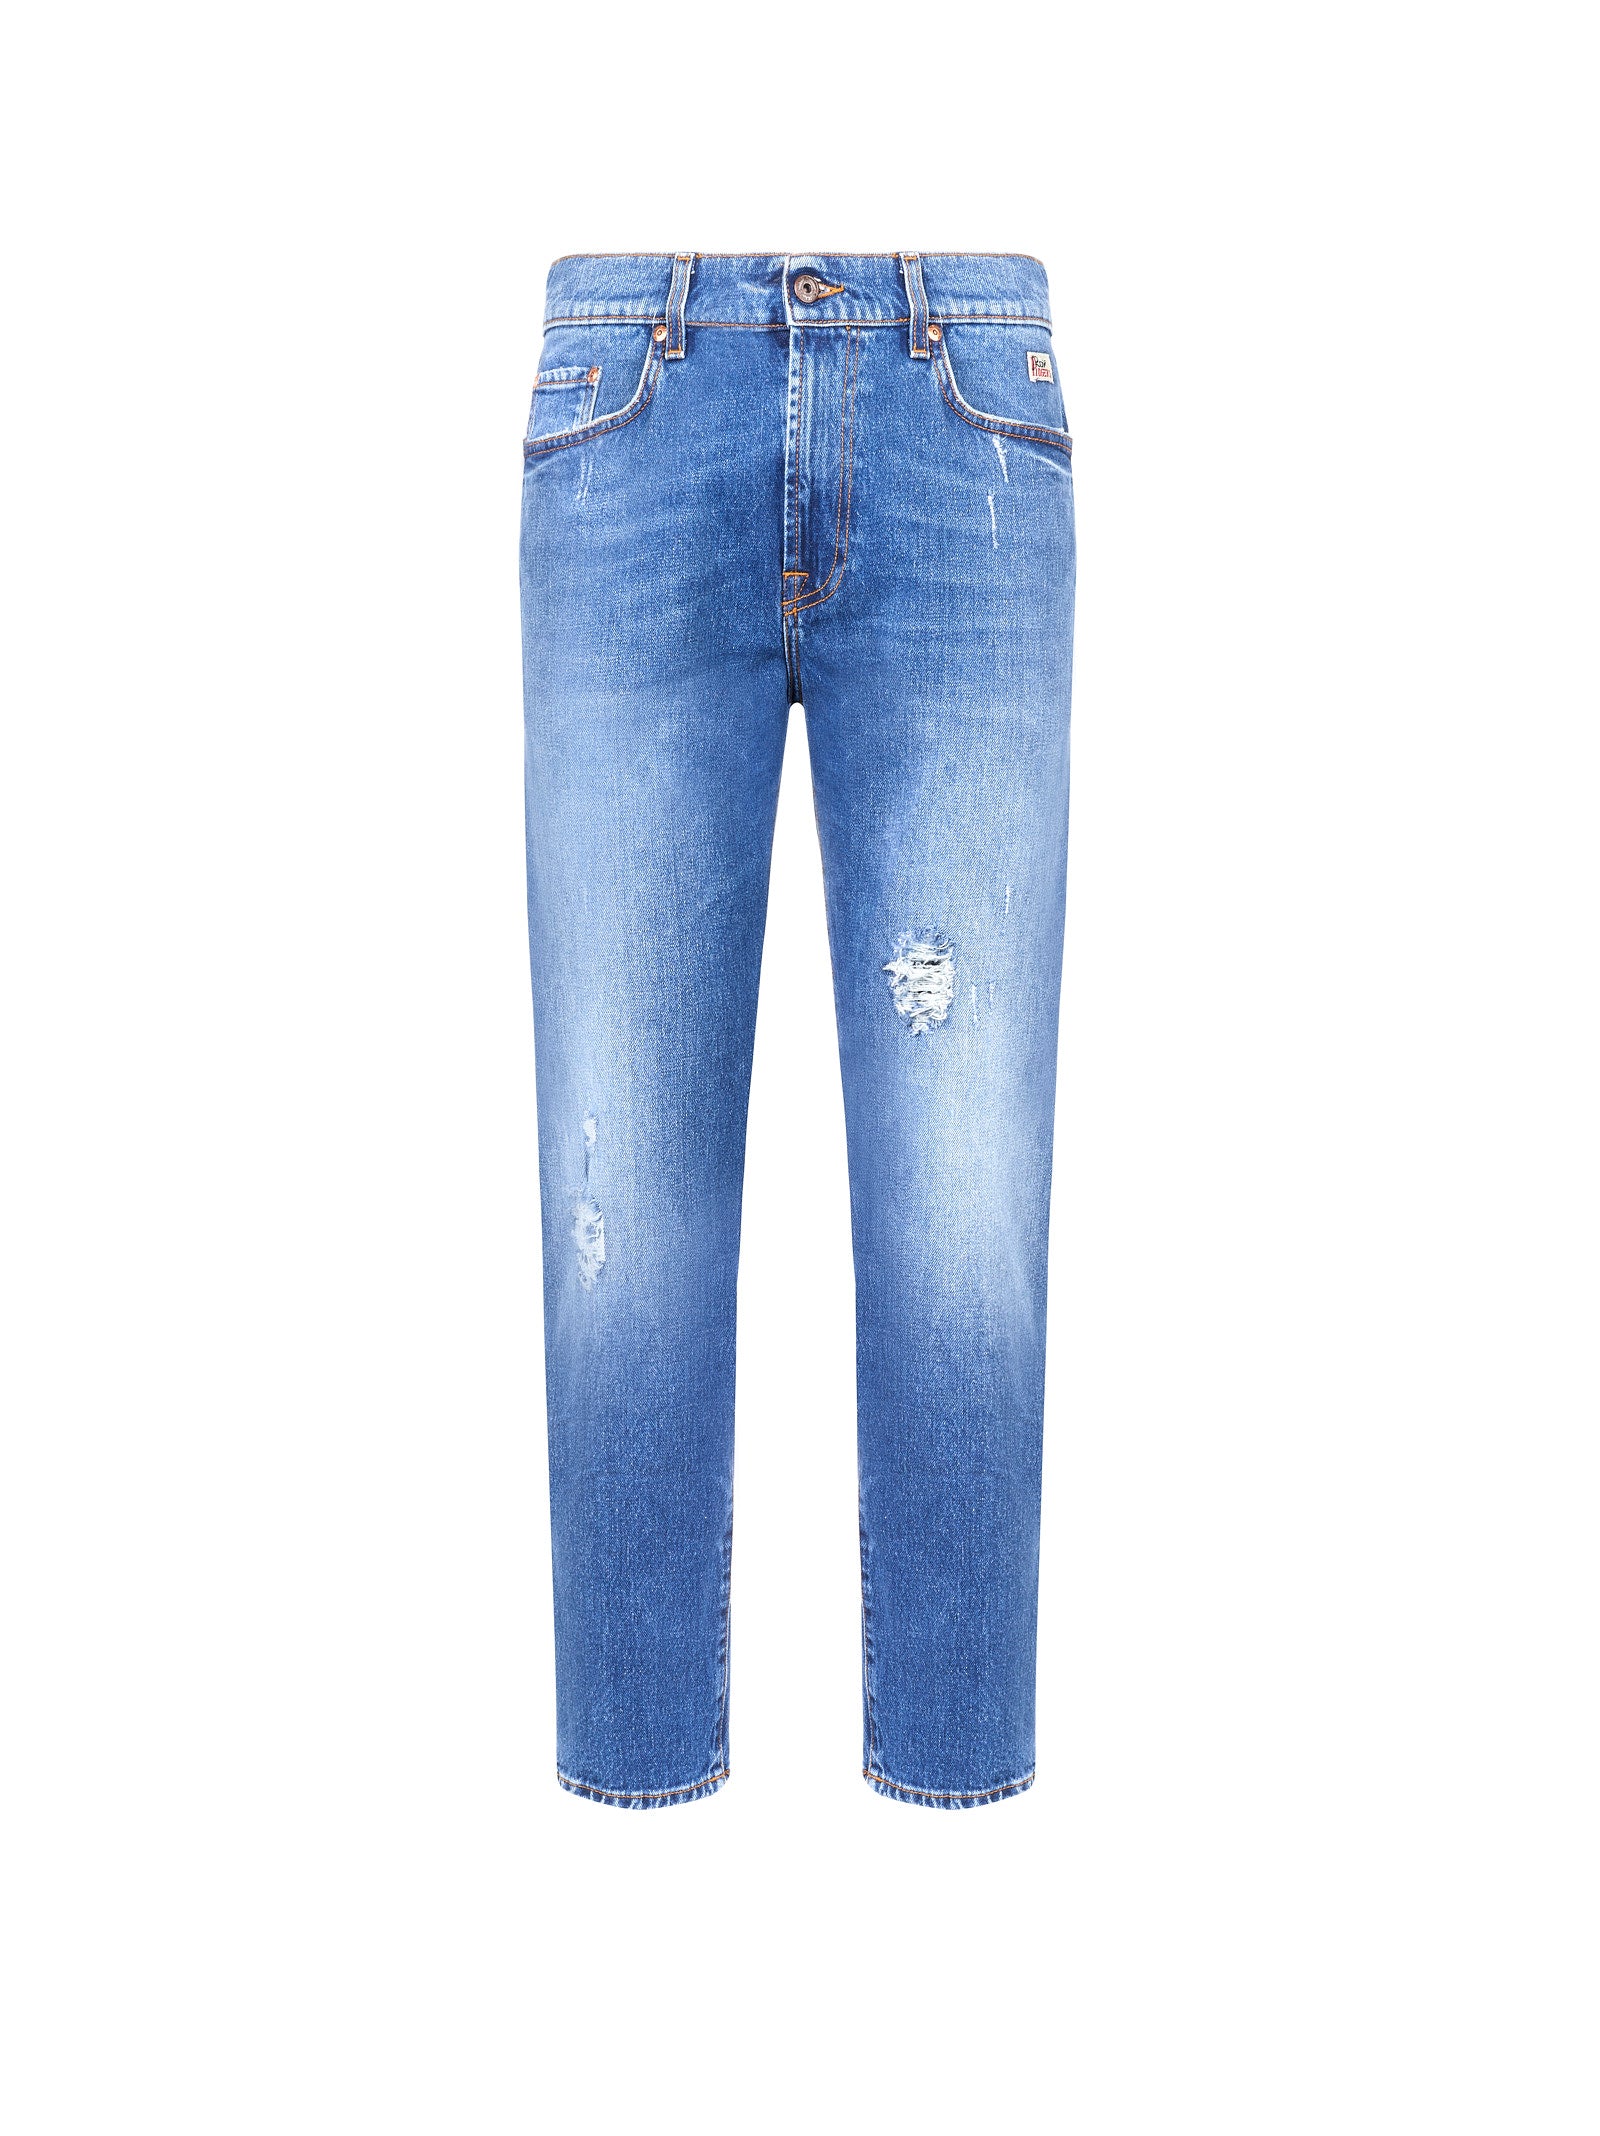 Jeans ROY ROGER'S 5 tasche regular
Blu